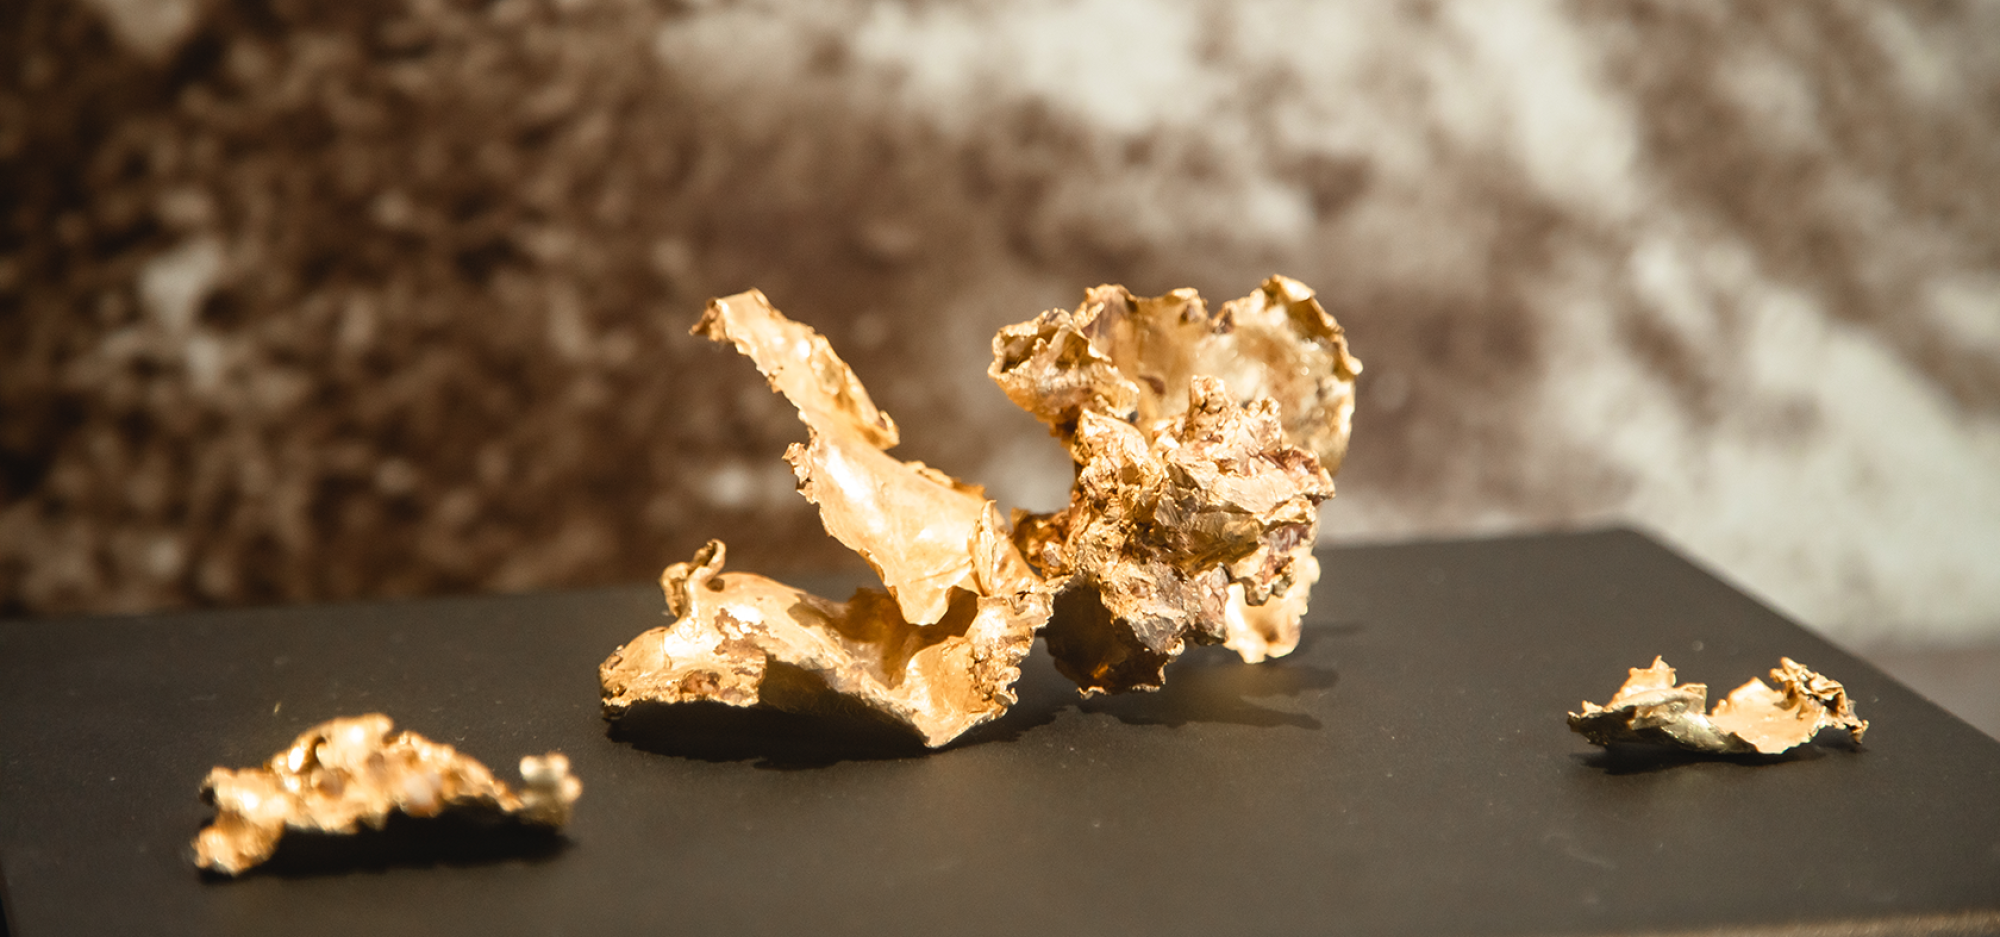 A close up image of natural gold nuggets